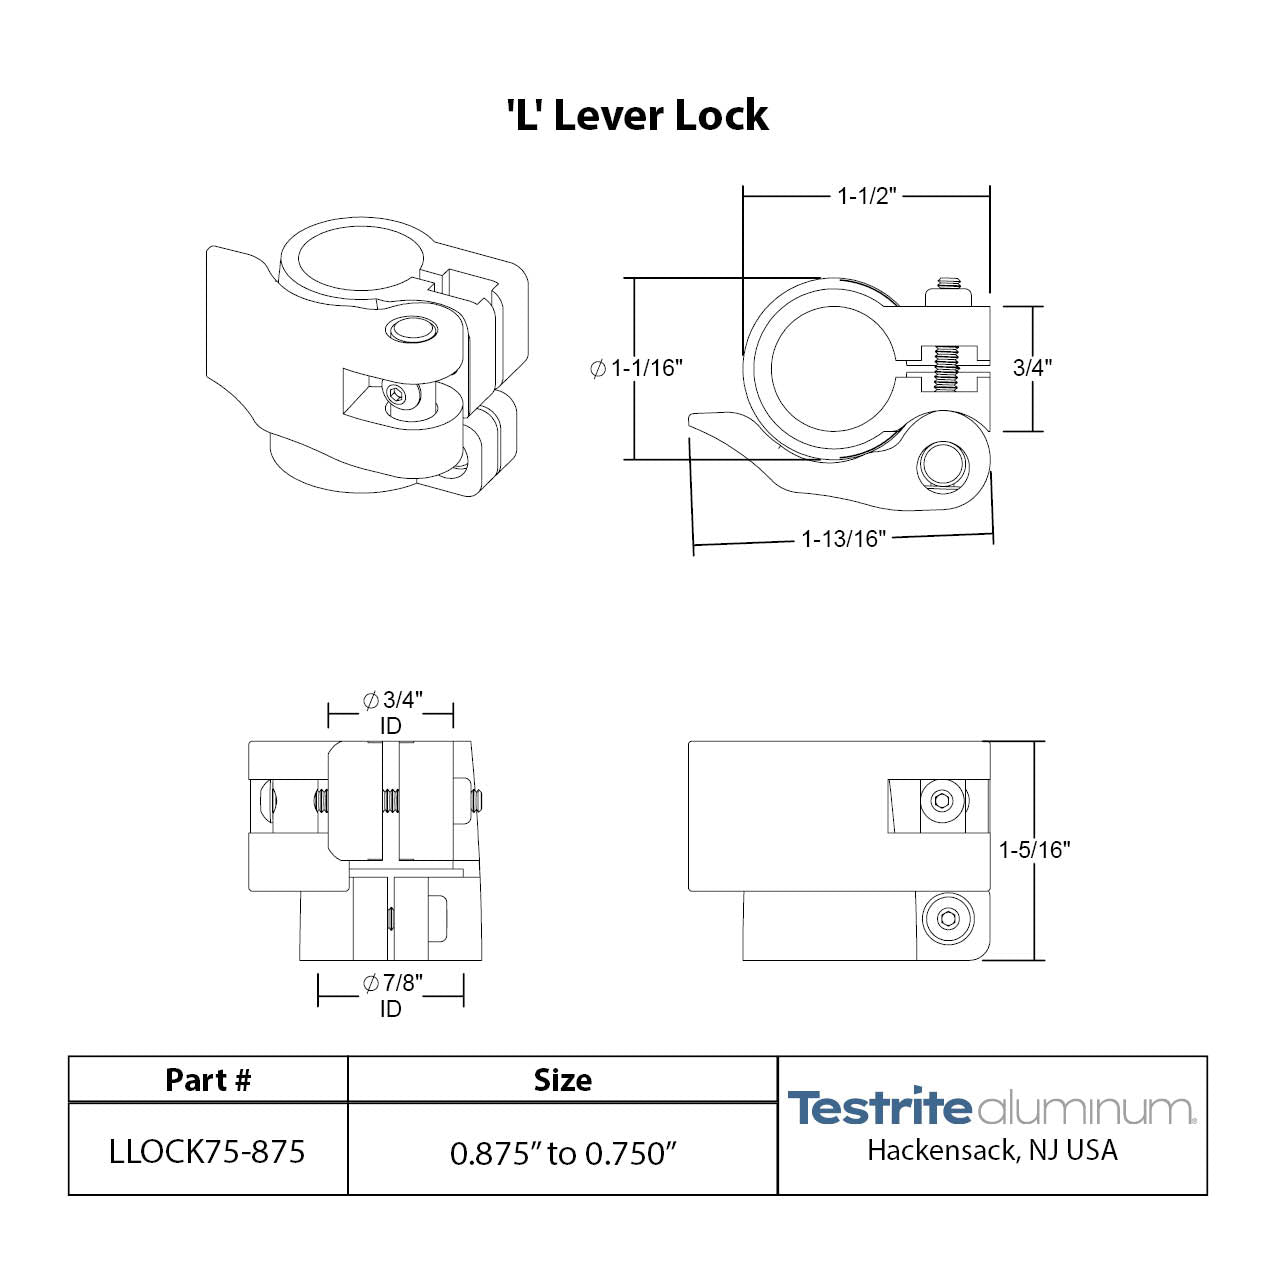 Specification sheet for LLOCK75-875